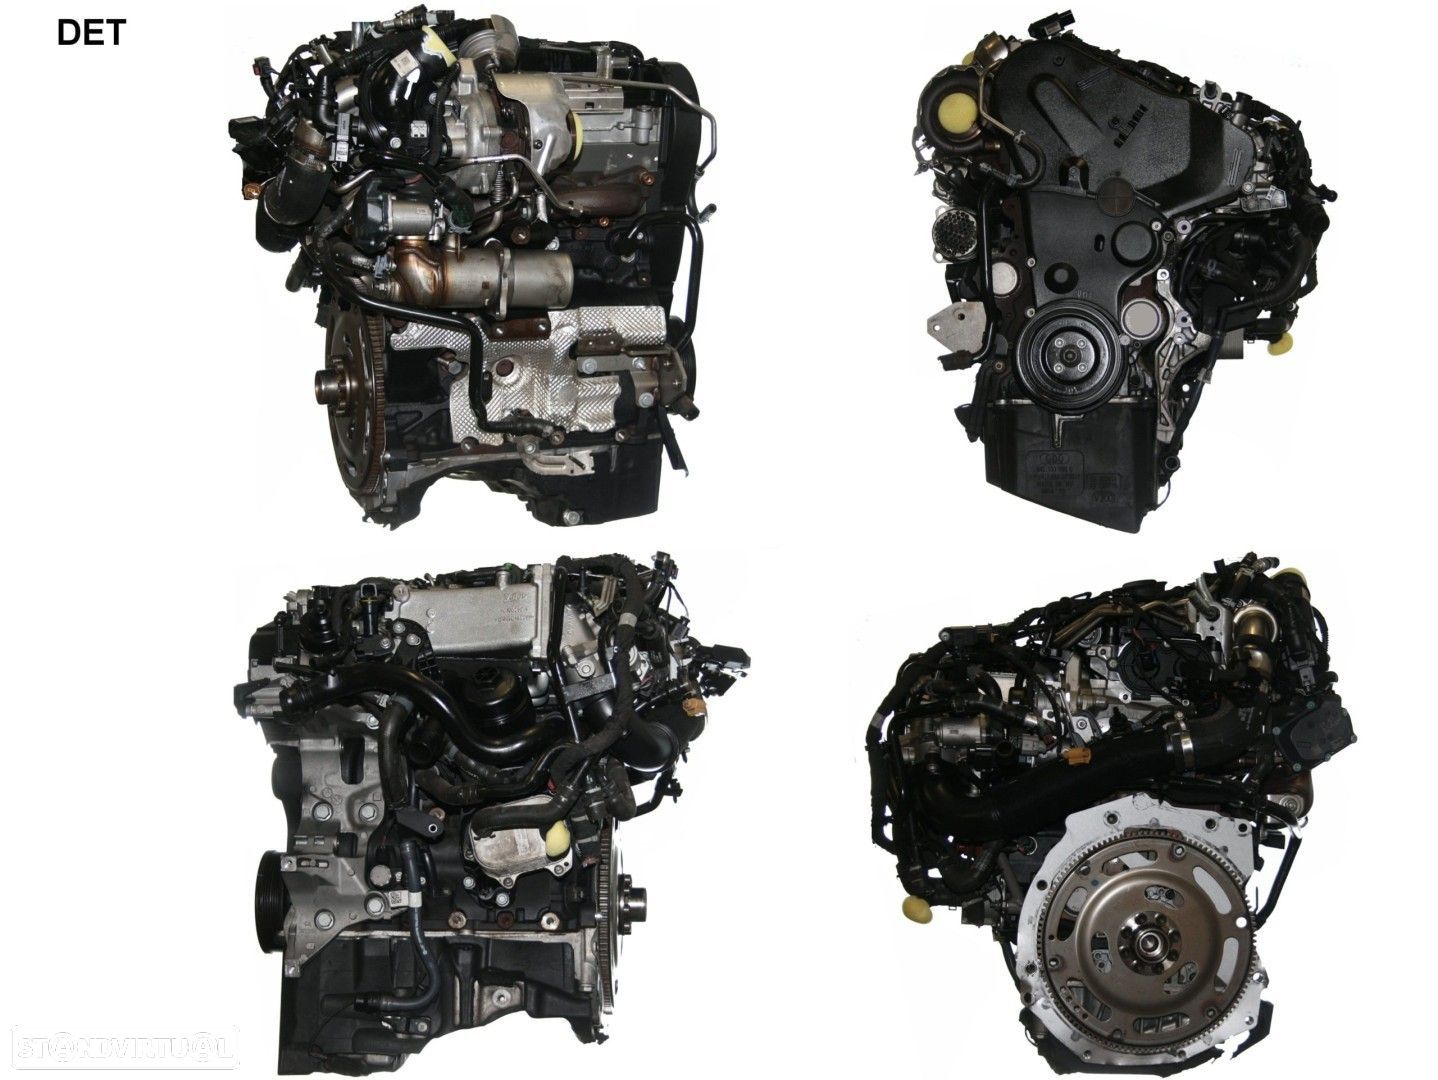 Motor Completo  Usado AUDI A4 2.0 TDI quattro DET - 1